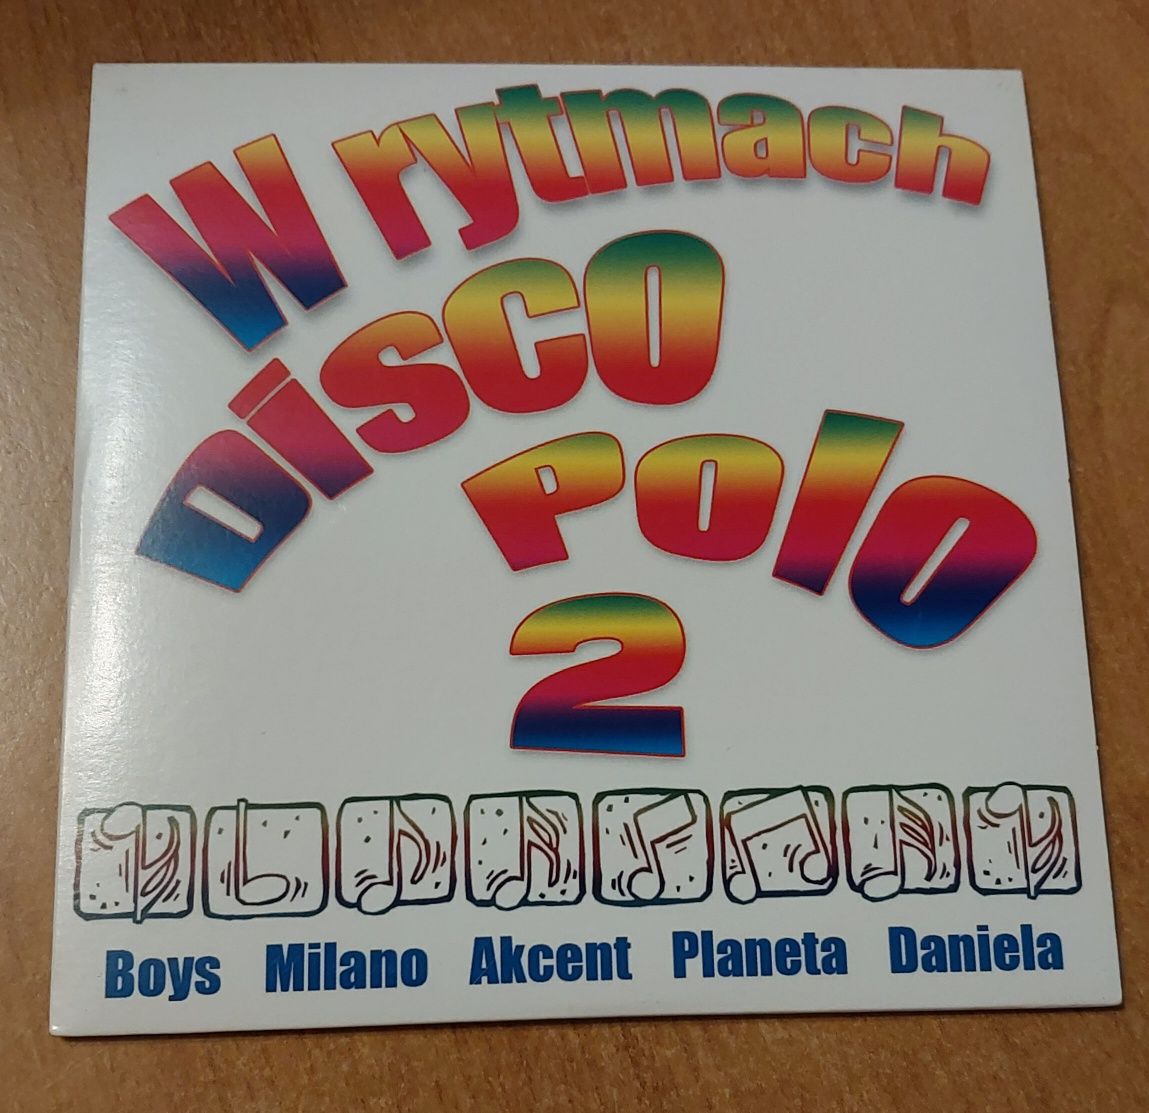 W rytmach Disco Polo 2 płyta CD